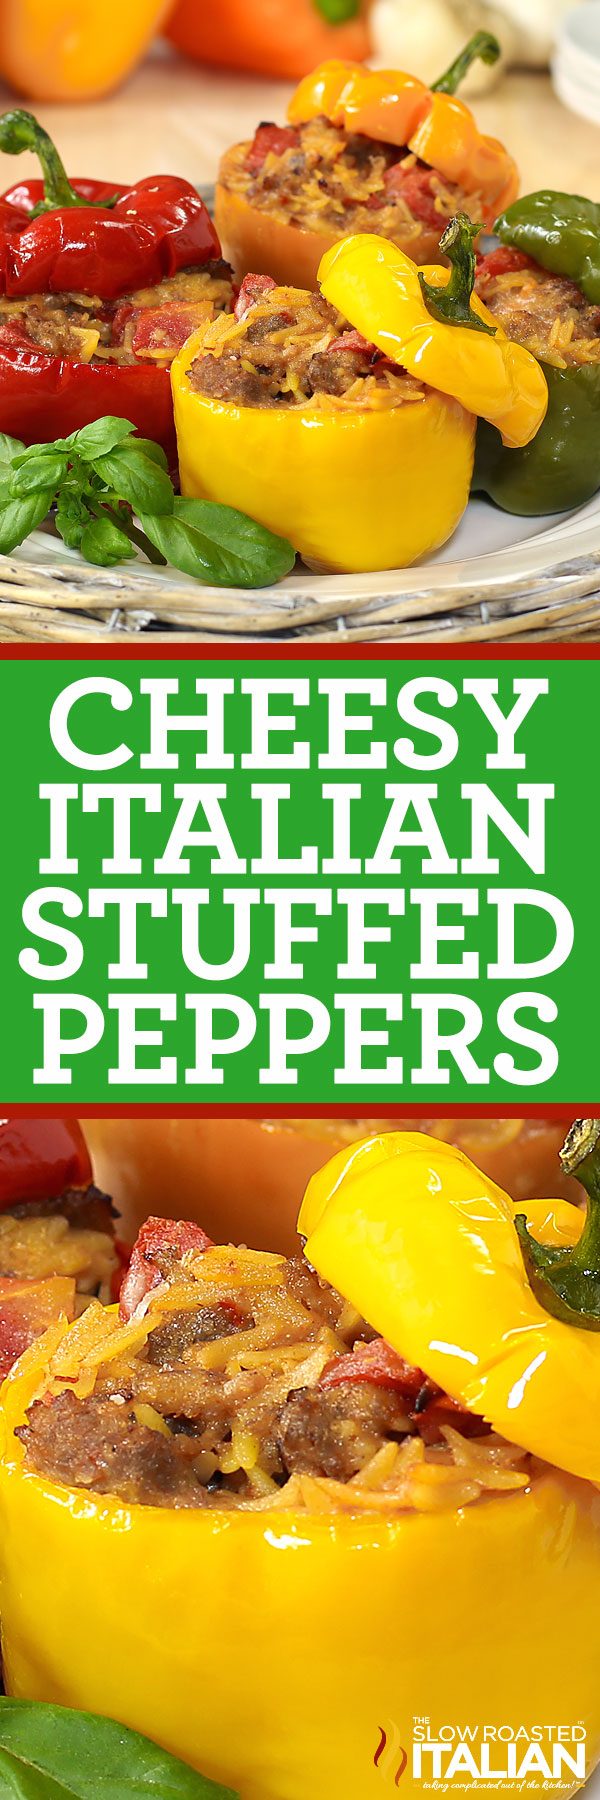 cheesy italian stuffed peppers -pin